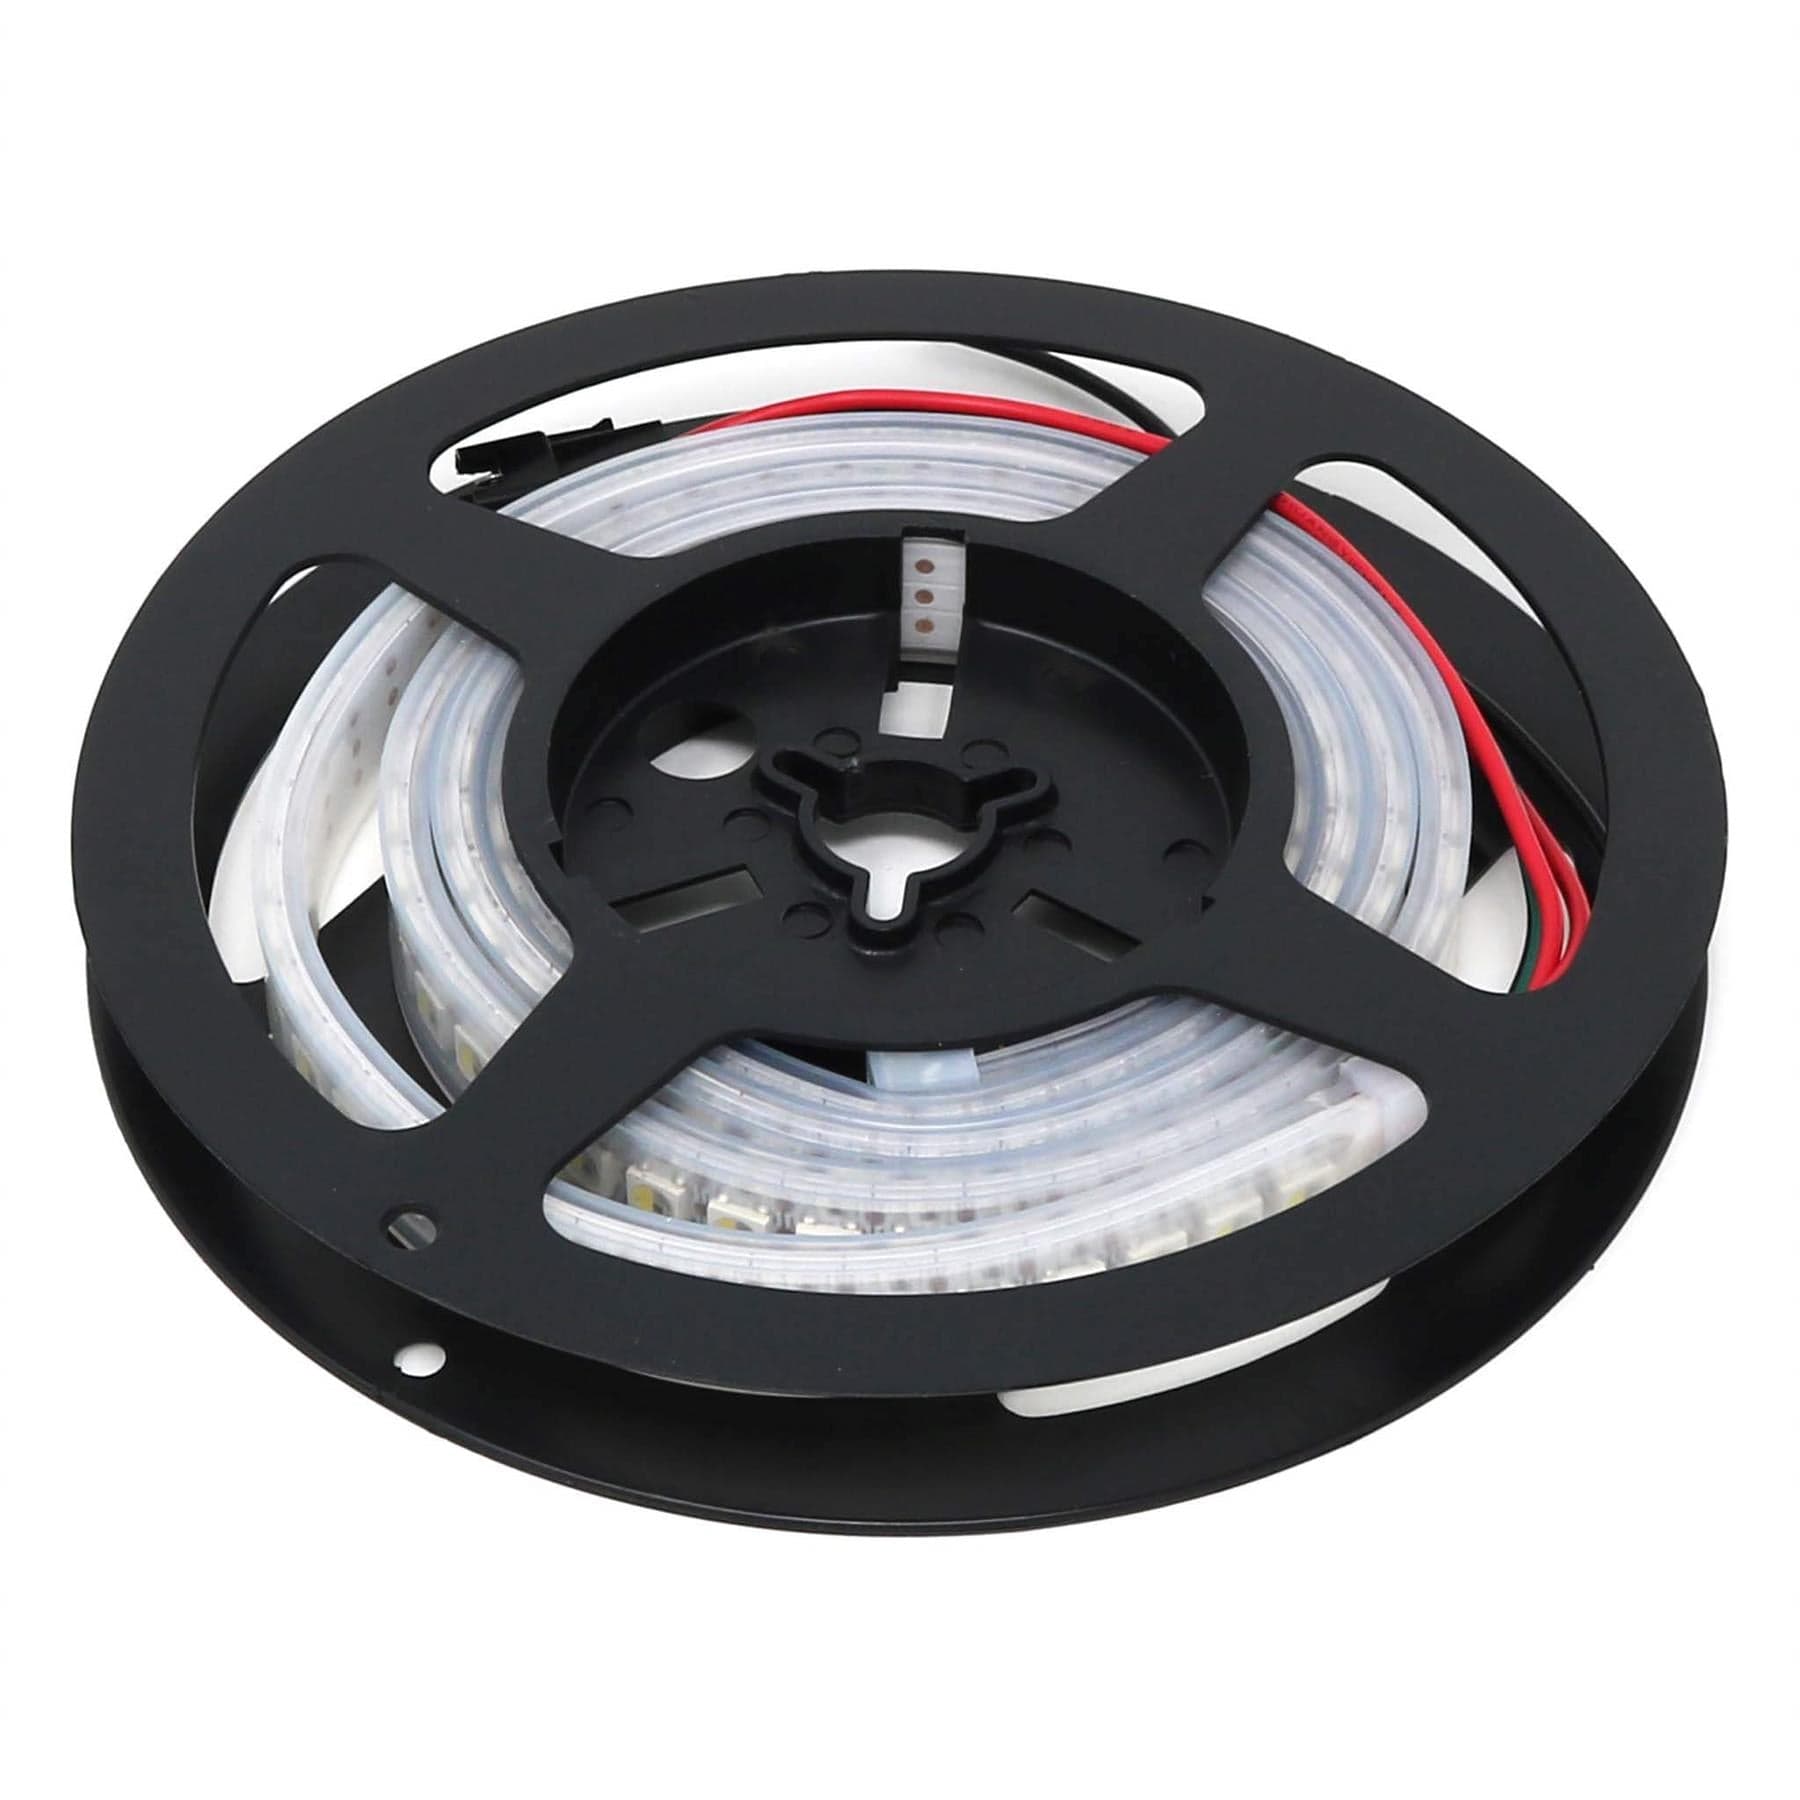 Flexible RGBW LED Strip (NeoPixel/WS2812/SK6812 compatible) - 144 LED/Metre - The Pi Hut